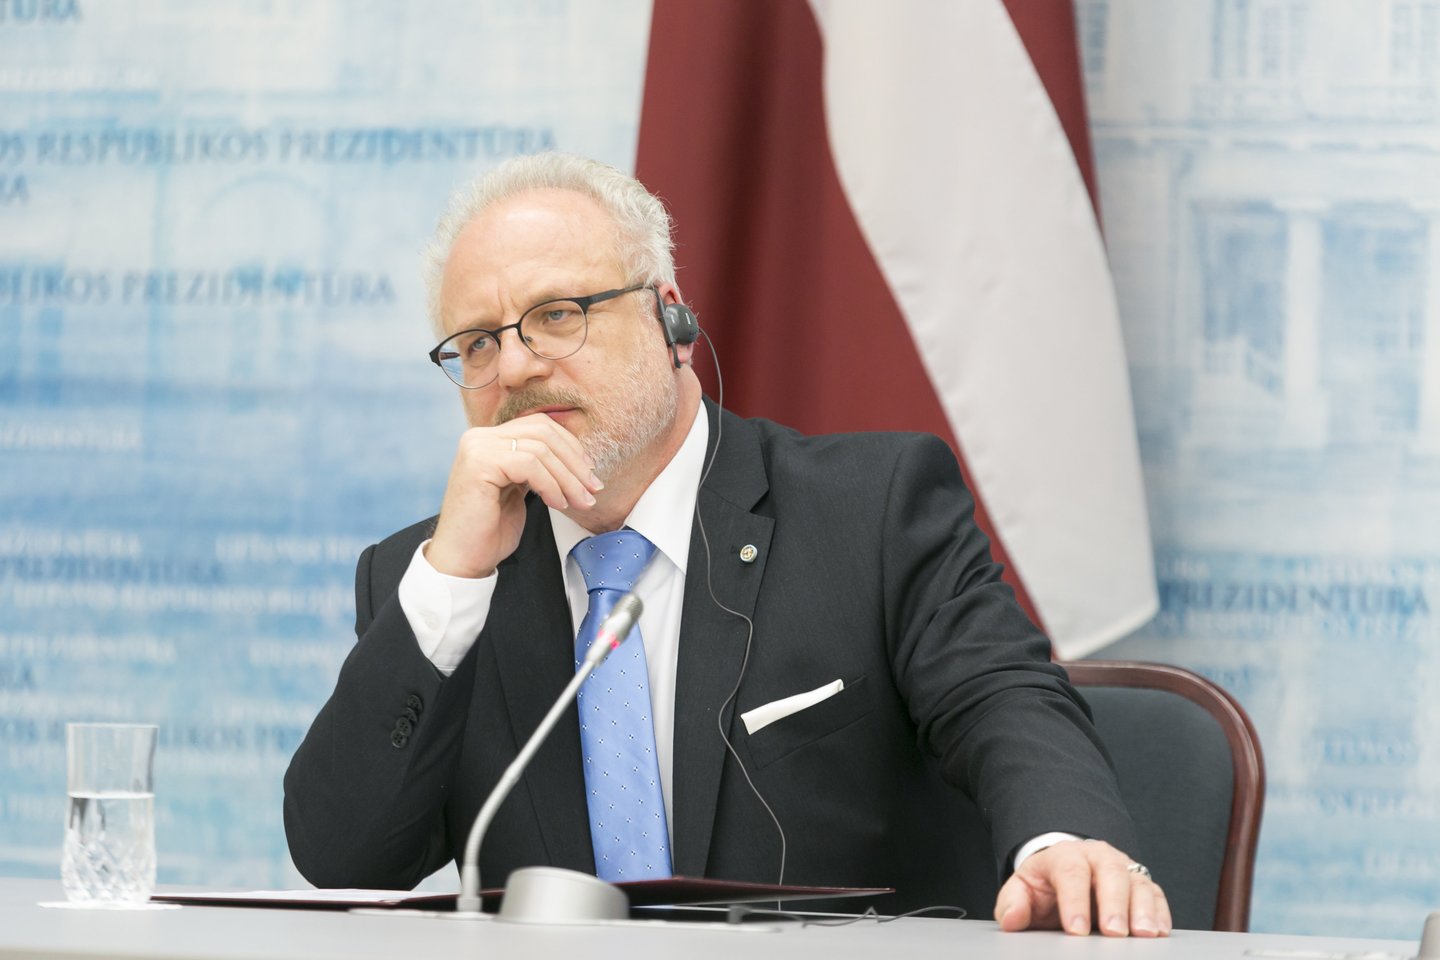  Latvijos prezidentas E.Levitas.<br>T.Bauro nuotr.